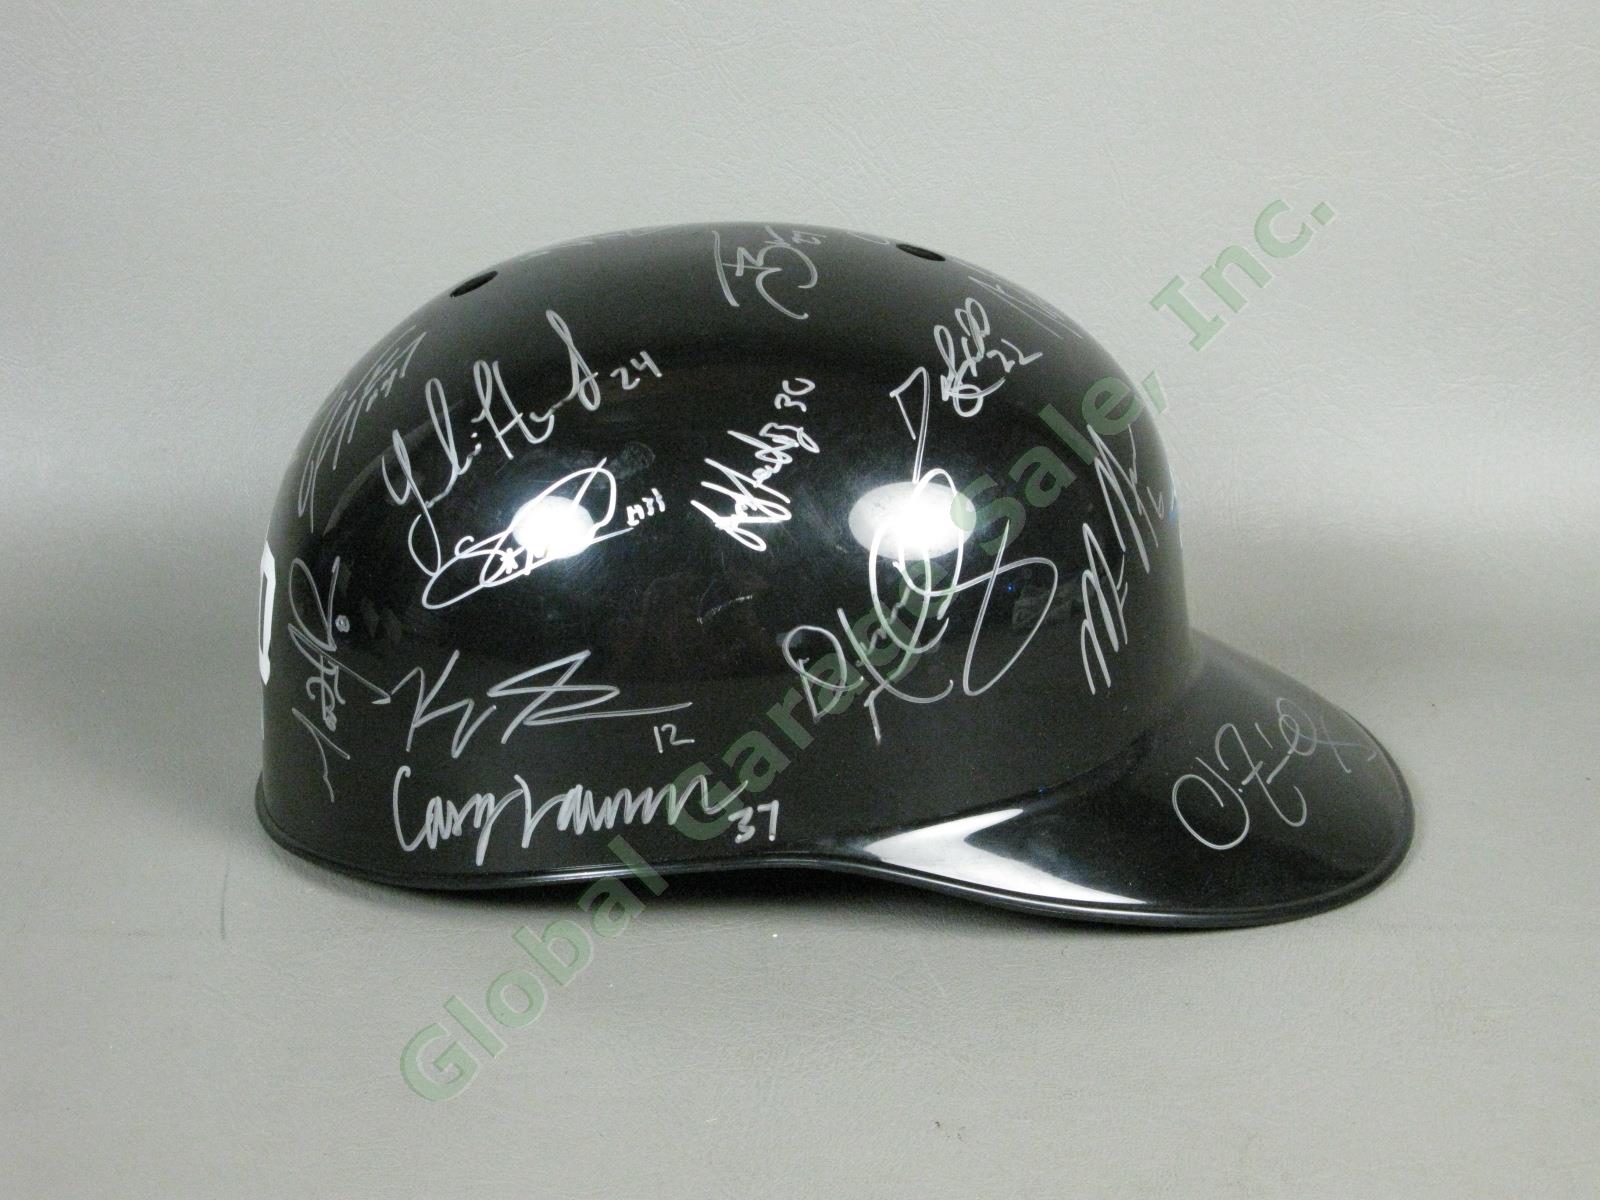 2010 Auburn Doubledays Team Signed Baseball Helmet NYPL Toronto Blue Jays NR 1